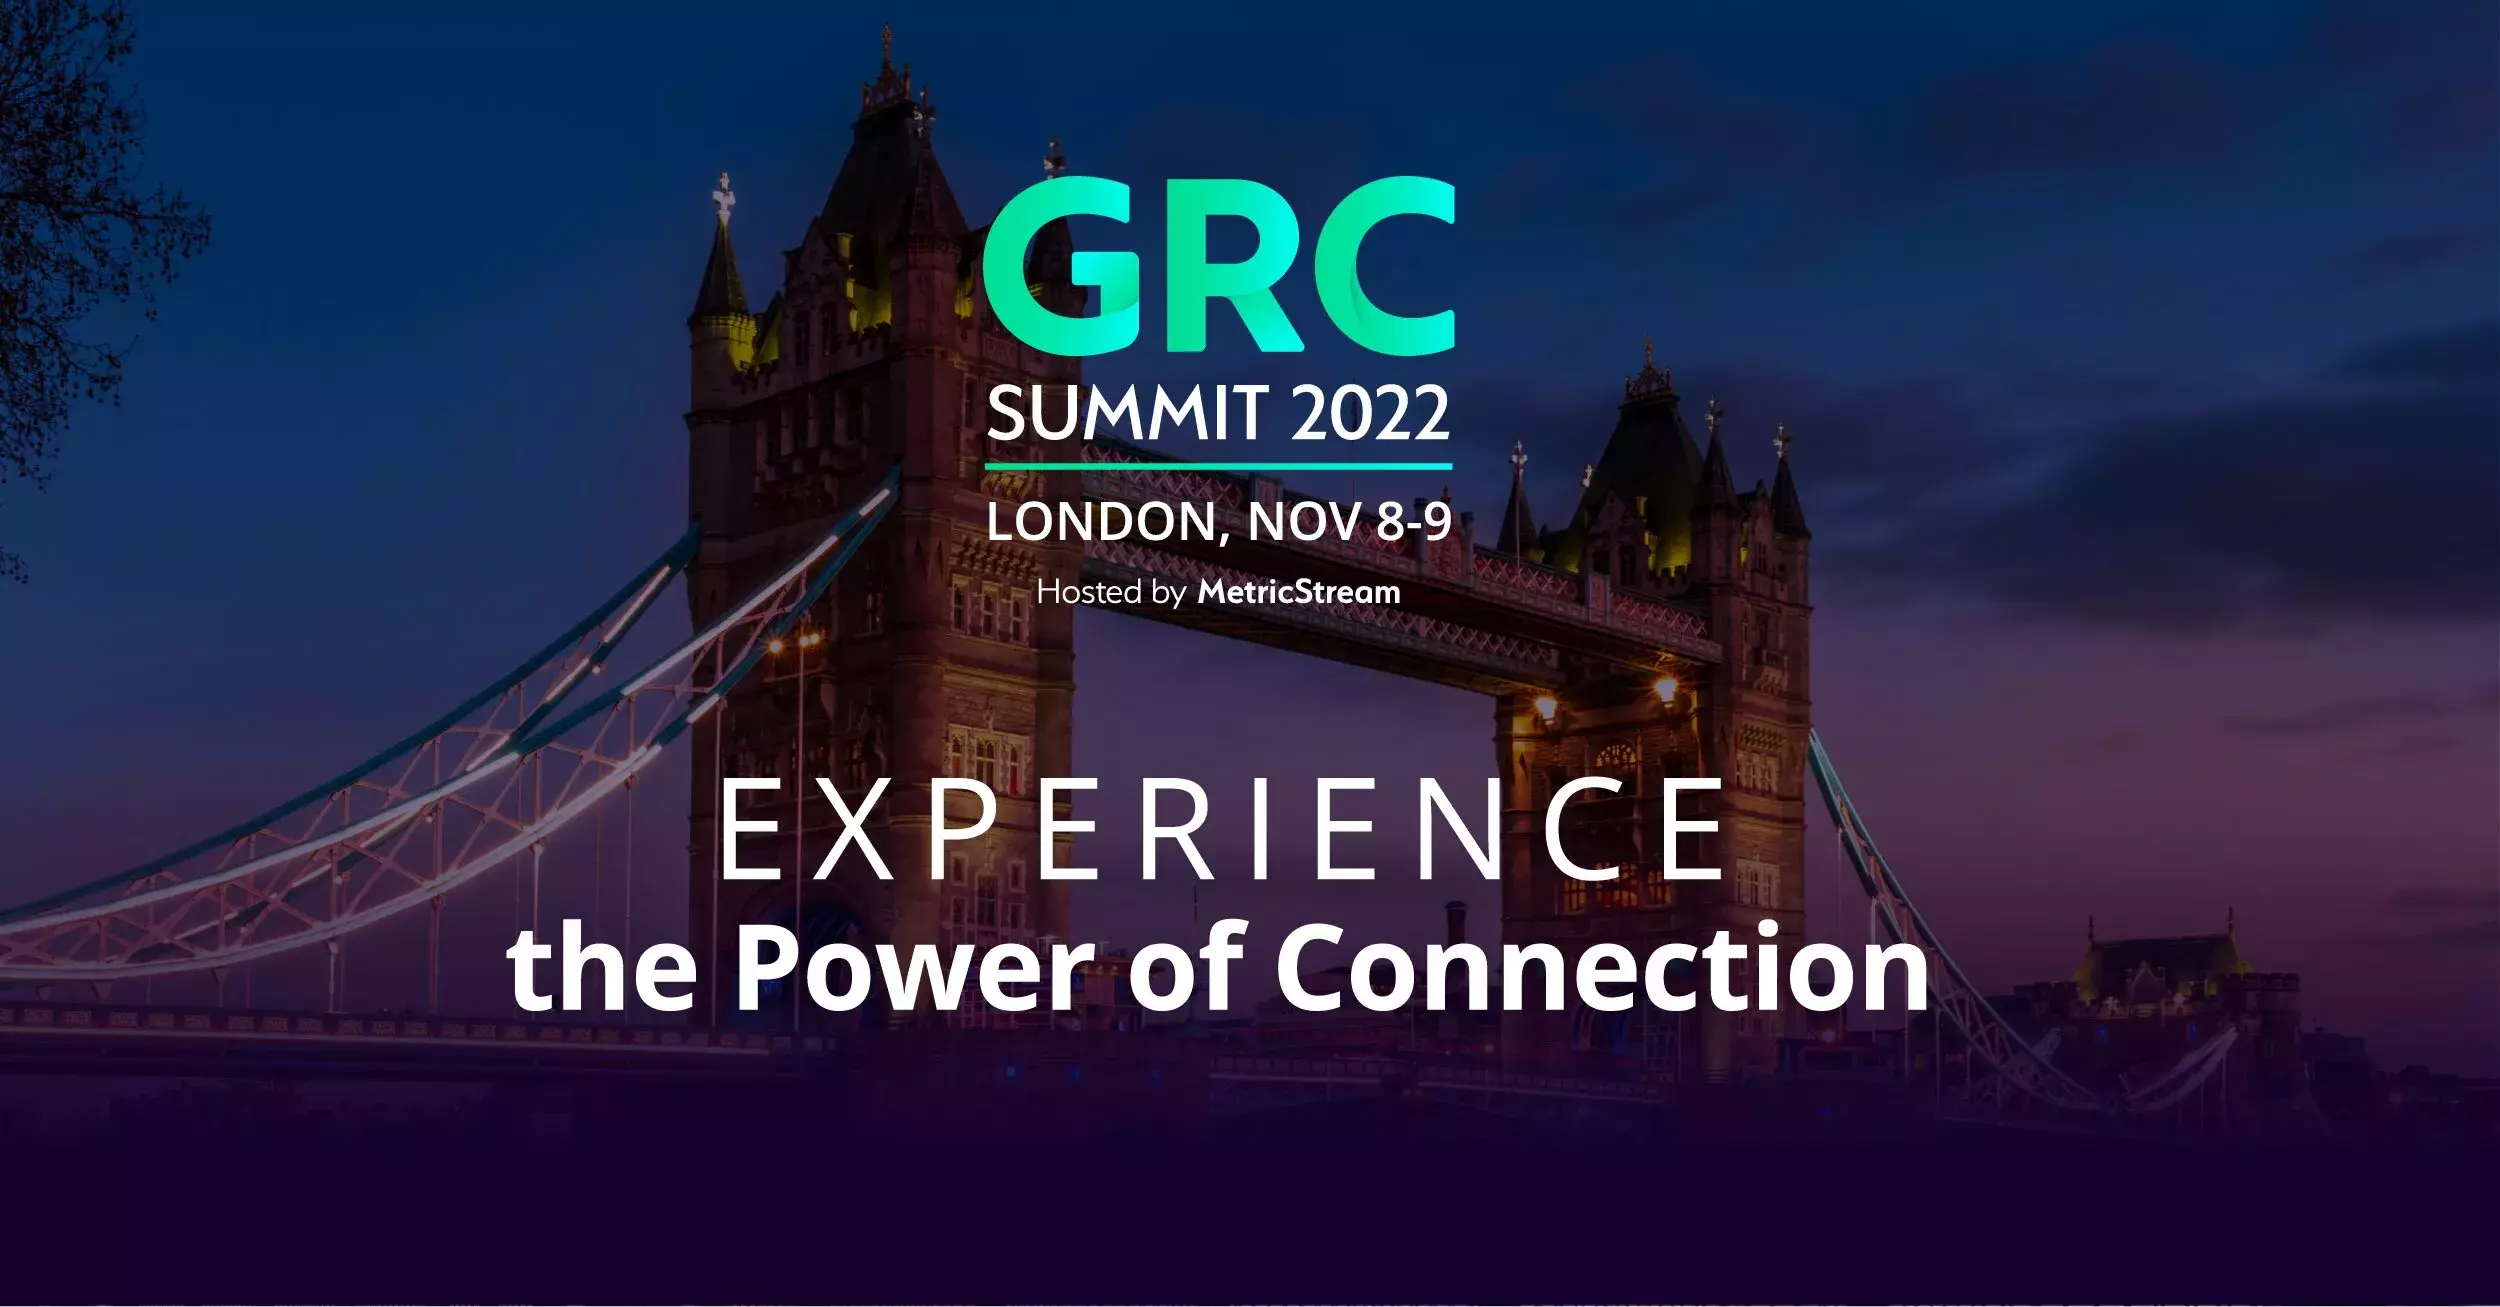 The GRC Summit